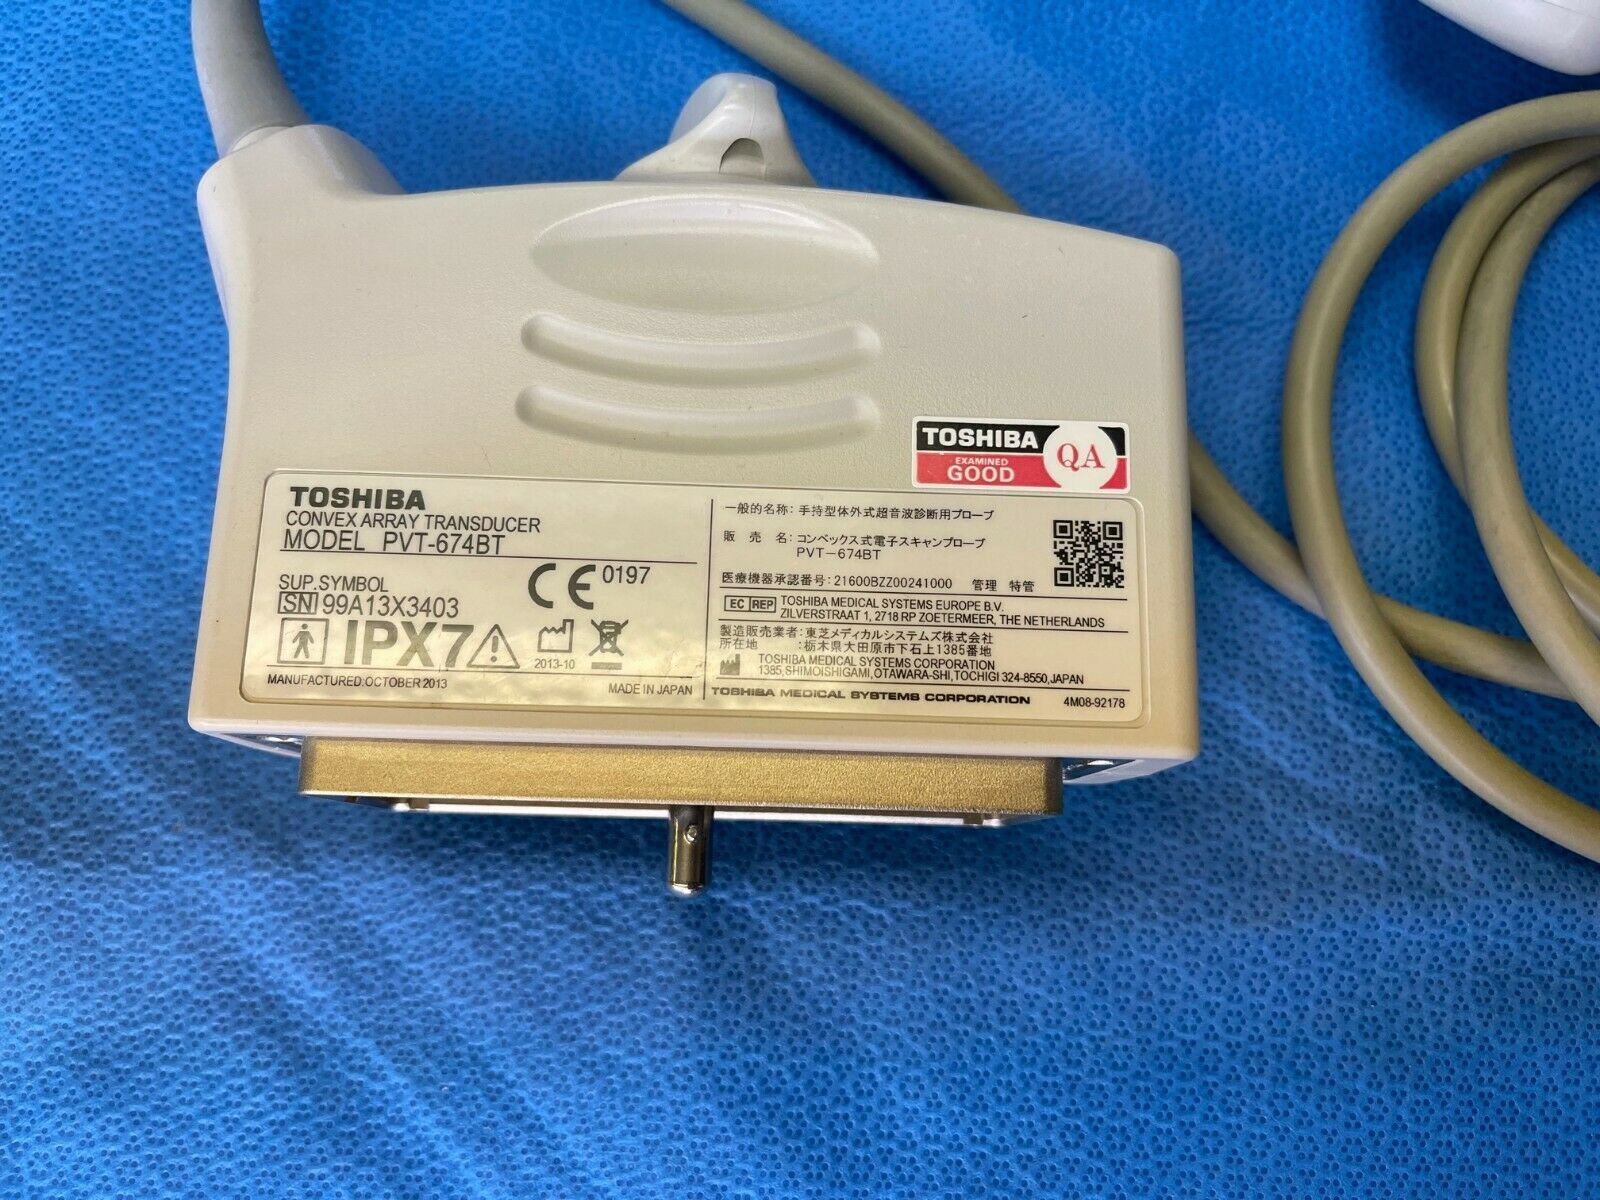 Toshiba Model PVT-674BT Convex Array Transducer Ultrasound Probe DIAGNOSTIC ULTRASOUND MACHINES FOR SALE